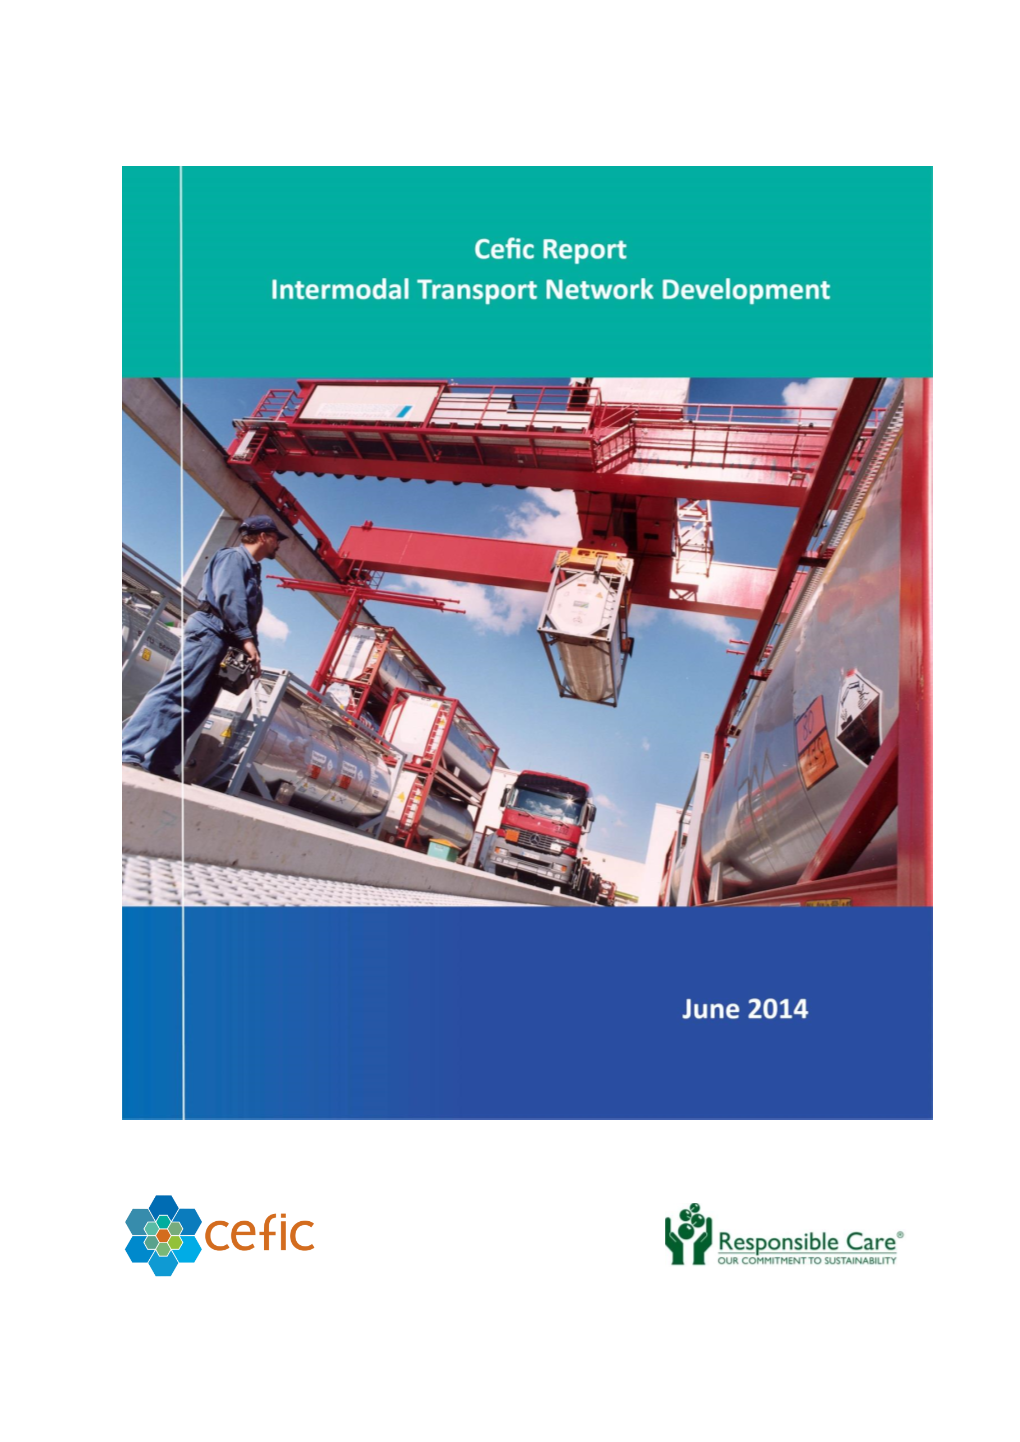 Cefic Report on Intermodal Transport Network Development